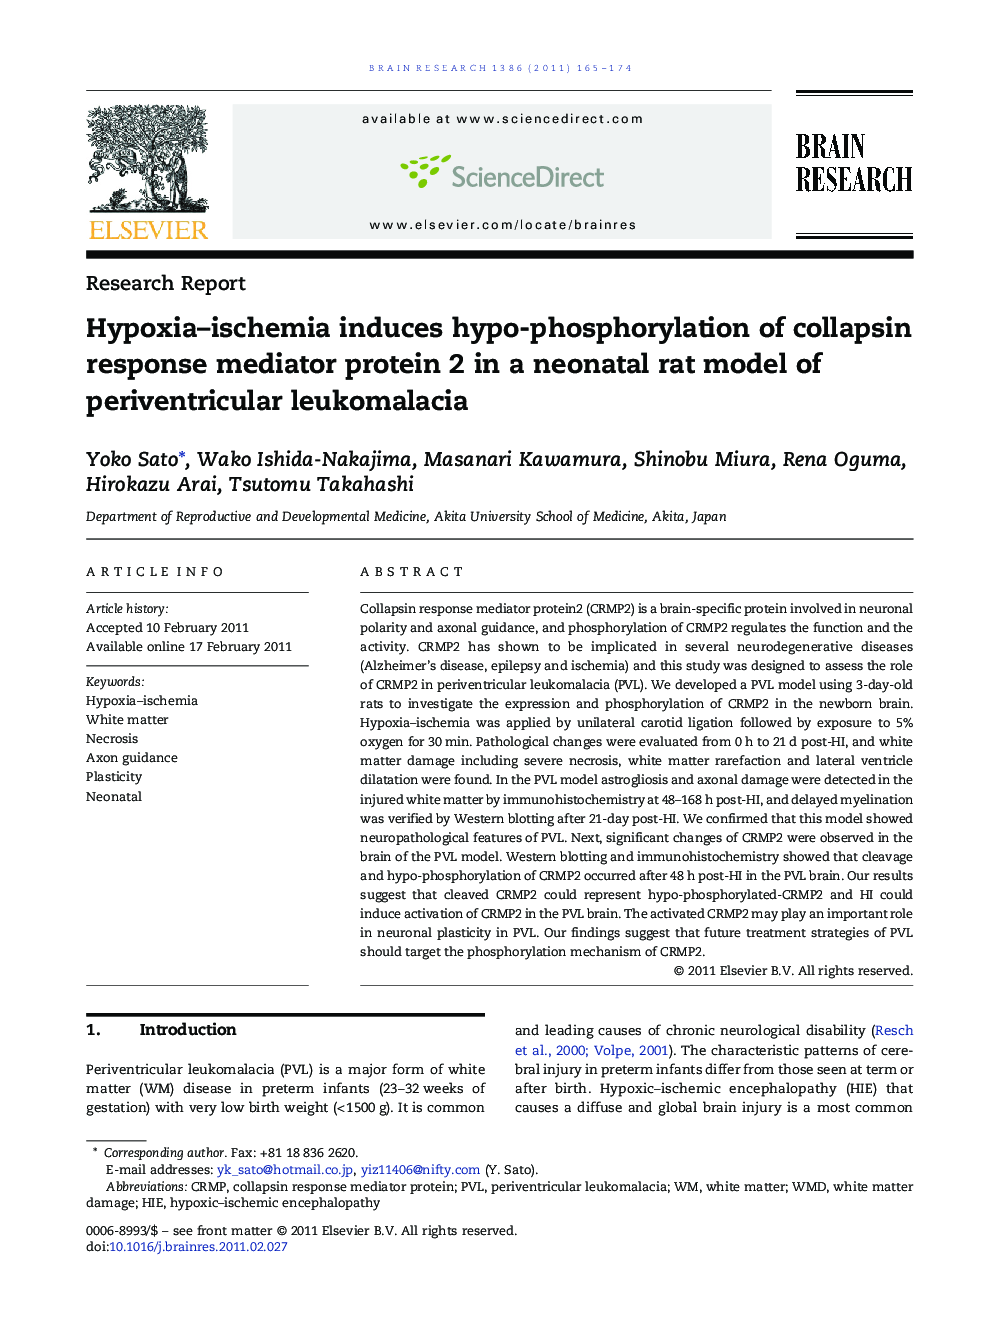 Hypoxia–ischemia induces hypo-phosphorylation of collapsin response mediator protein 2 in a neonatal rat model of periventricular leukomalacia